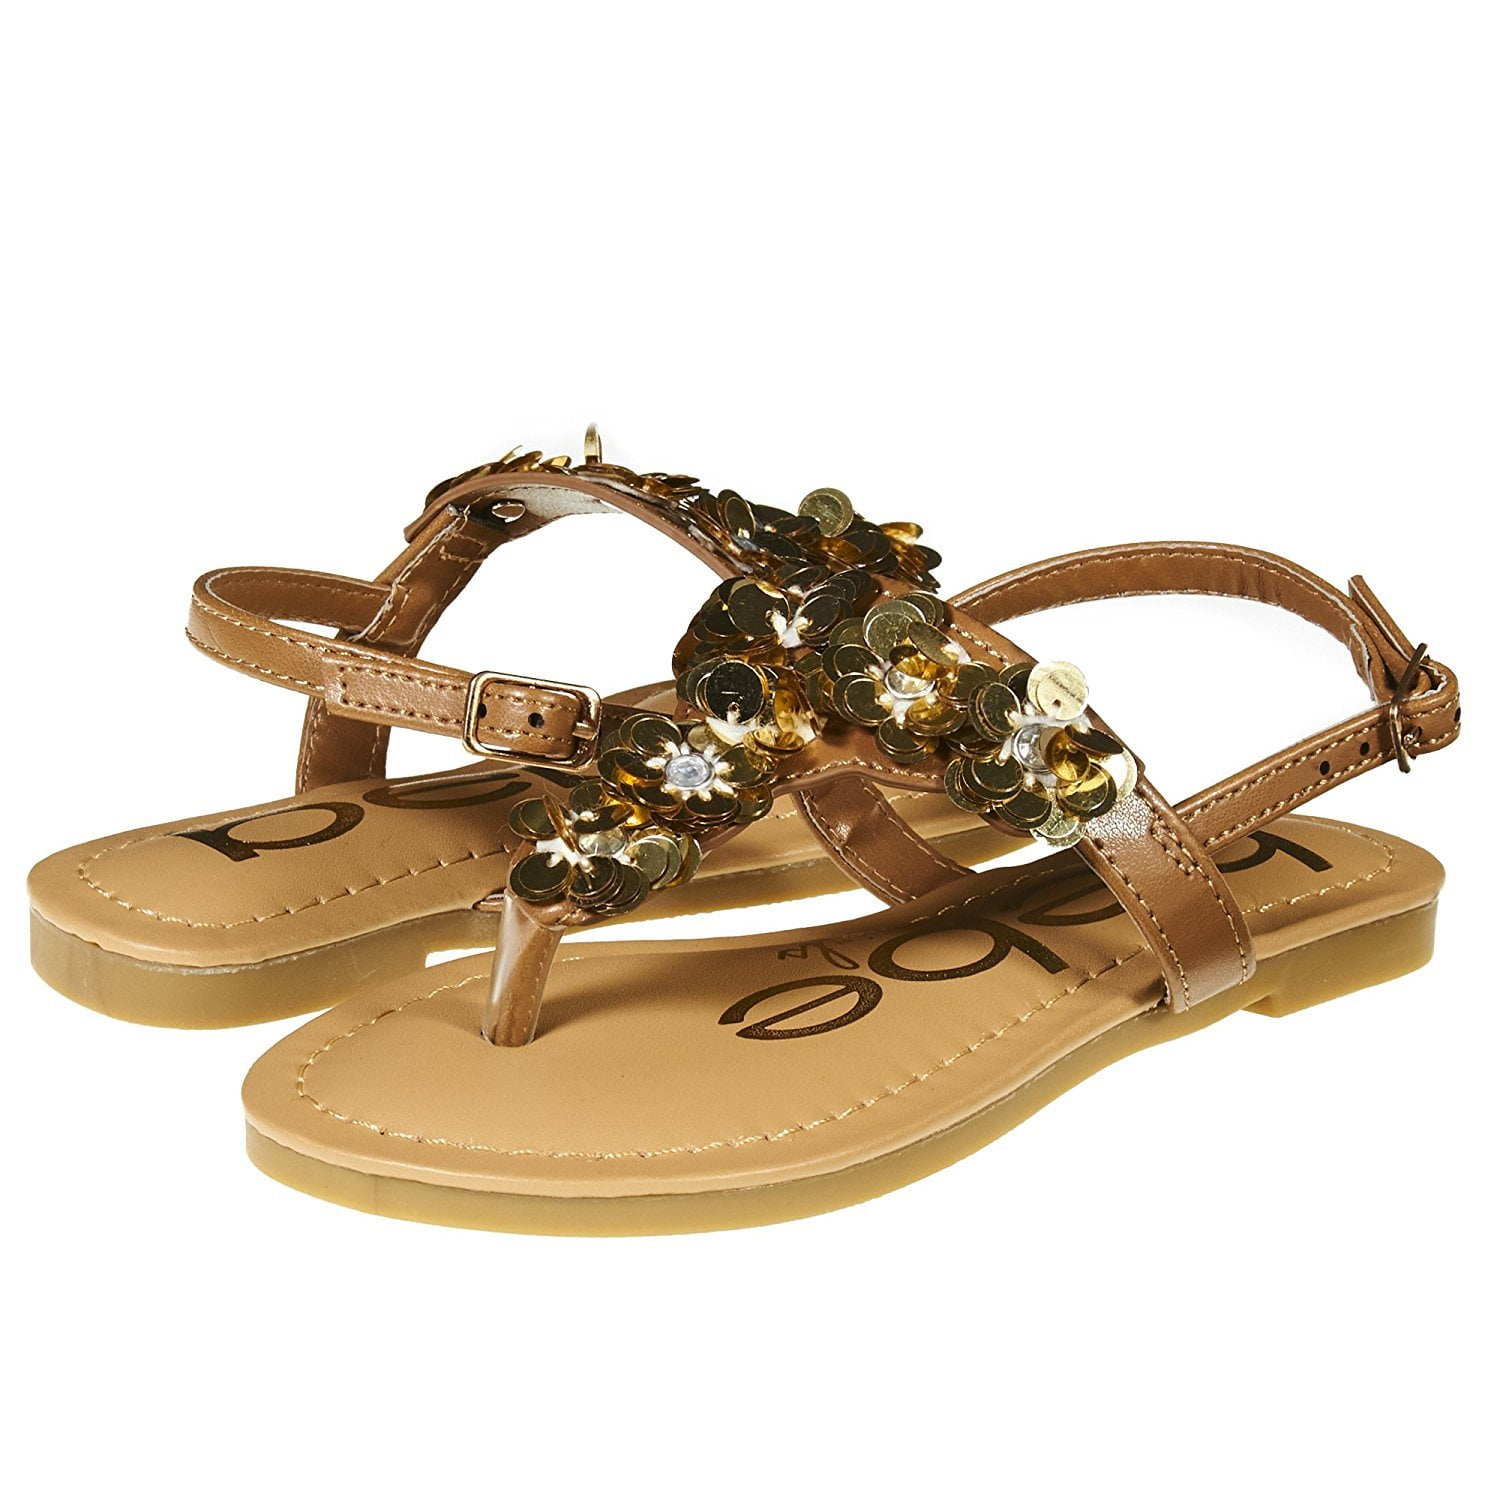 gold flat sandals size 11